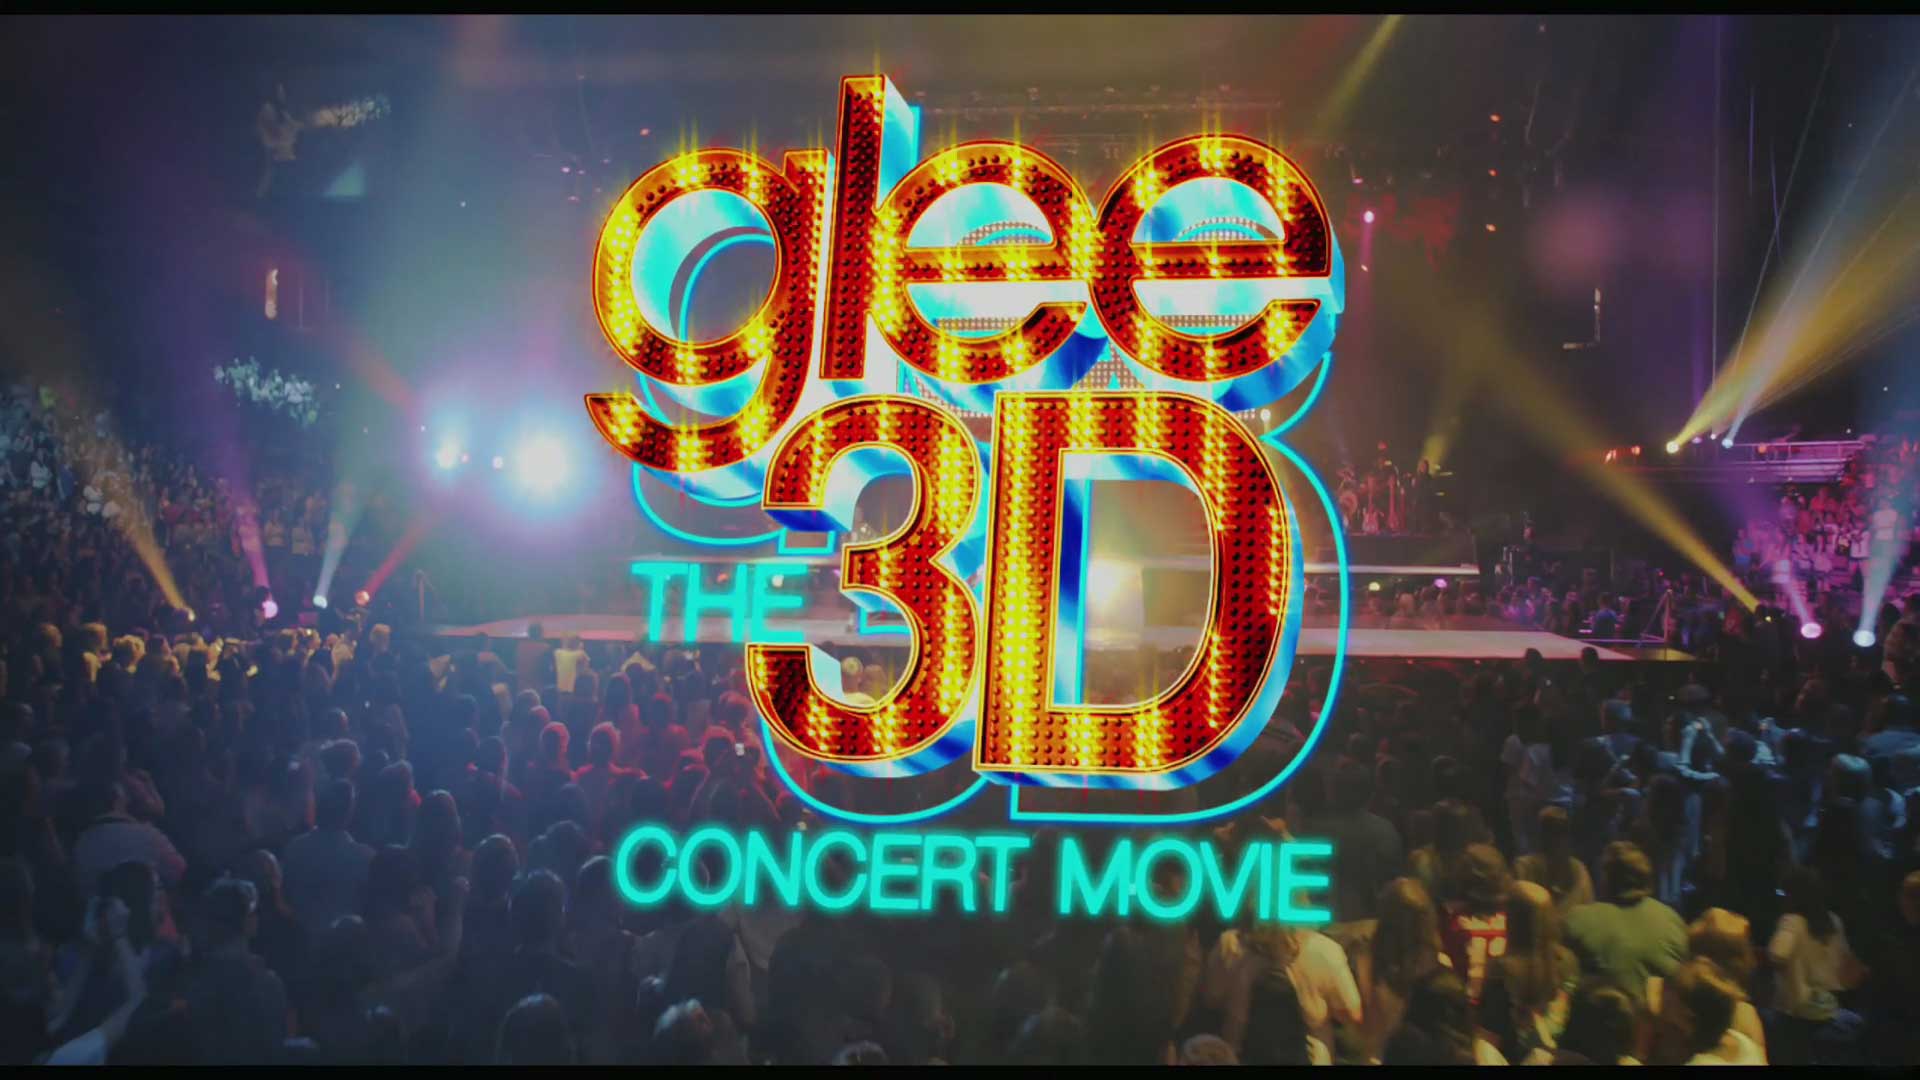 Shfaqet premiera e filmit “Glee The 3D Concert Movie”